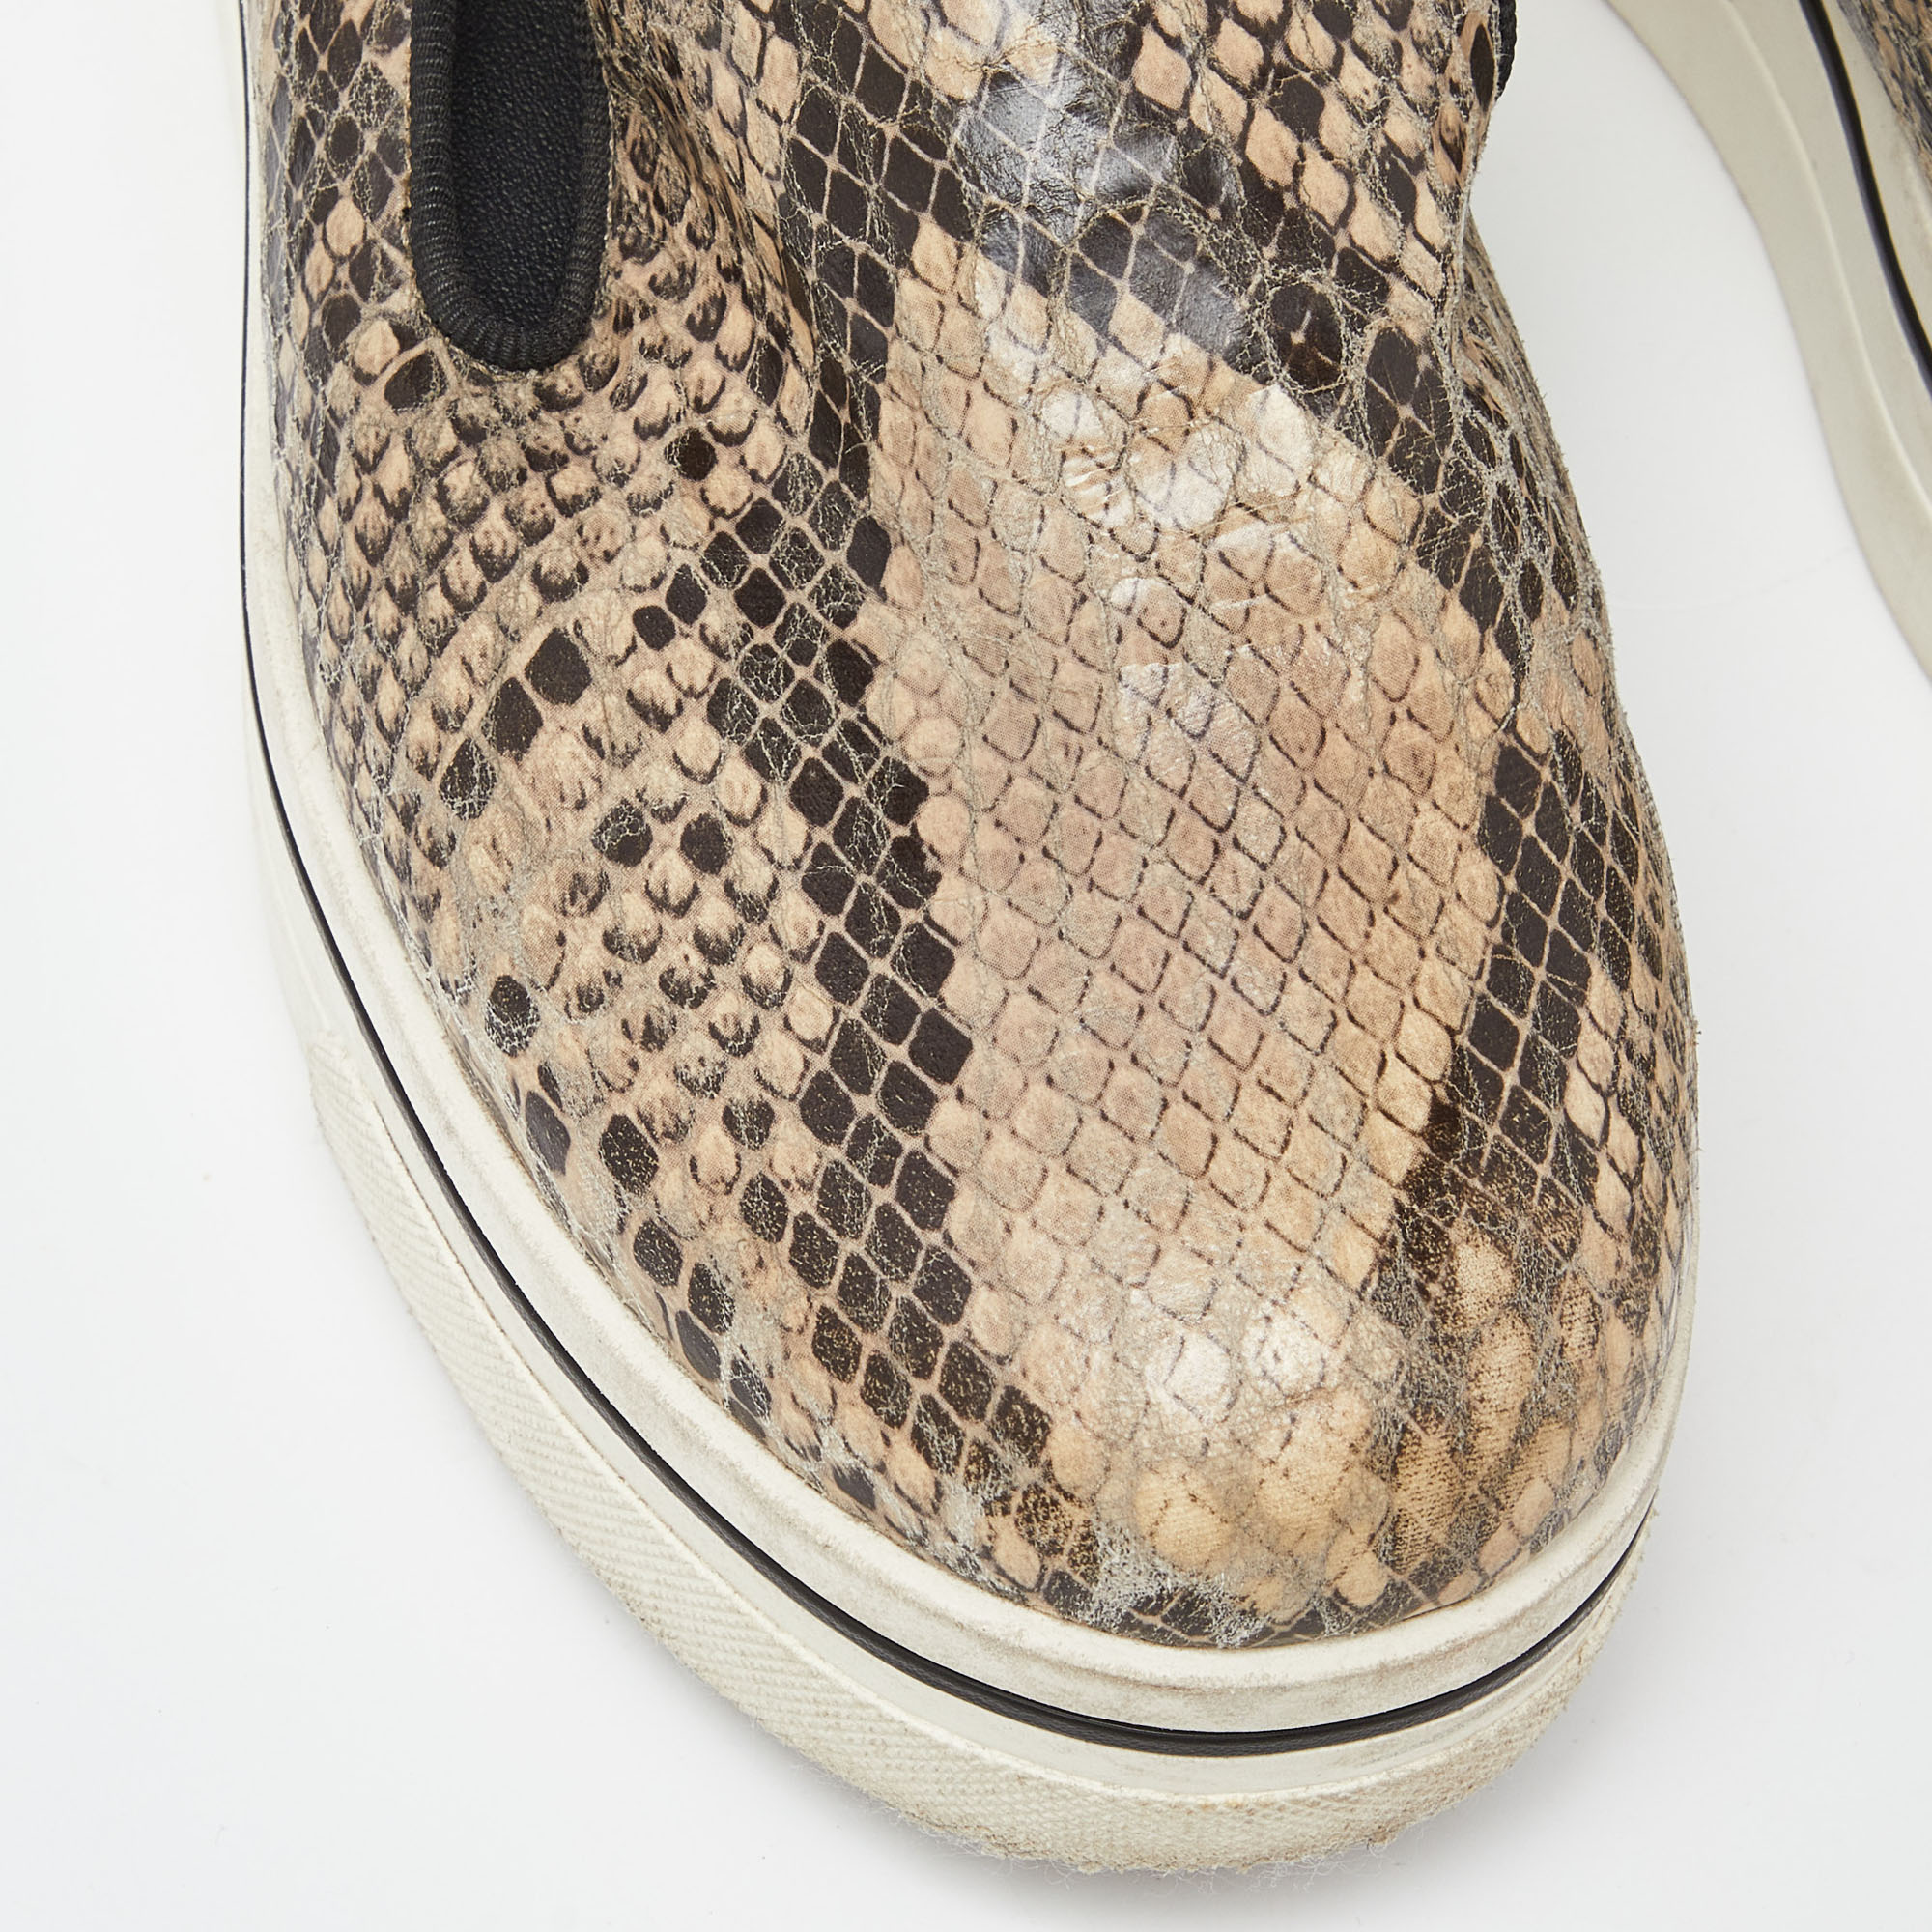 Stella McCartney Brown/Beige Faux Snakeskin Embossed Leather Binx Platform Sneakers Size 35